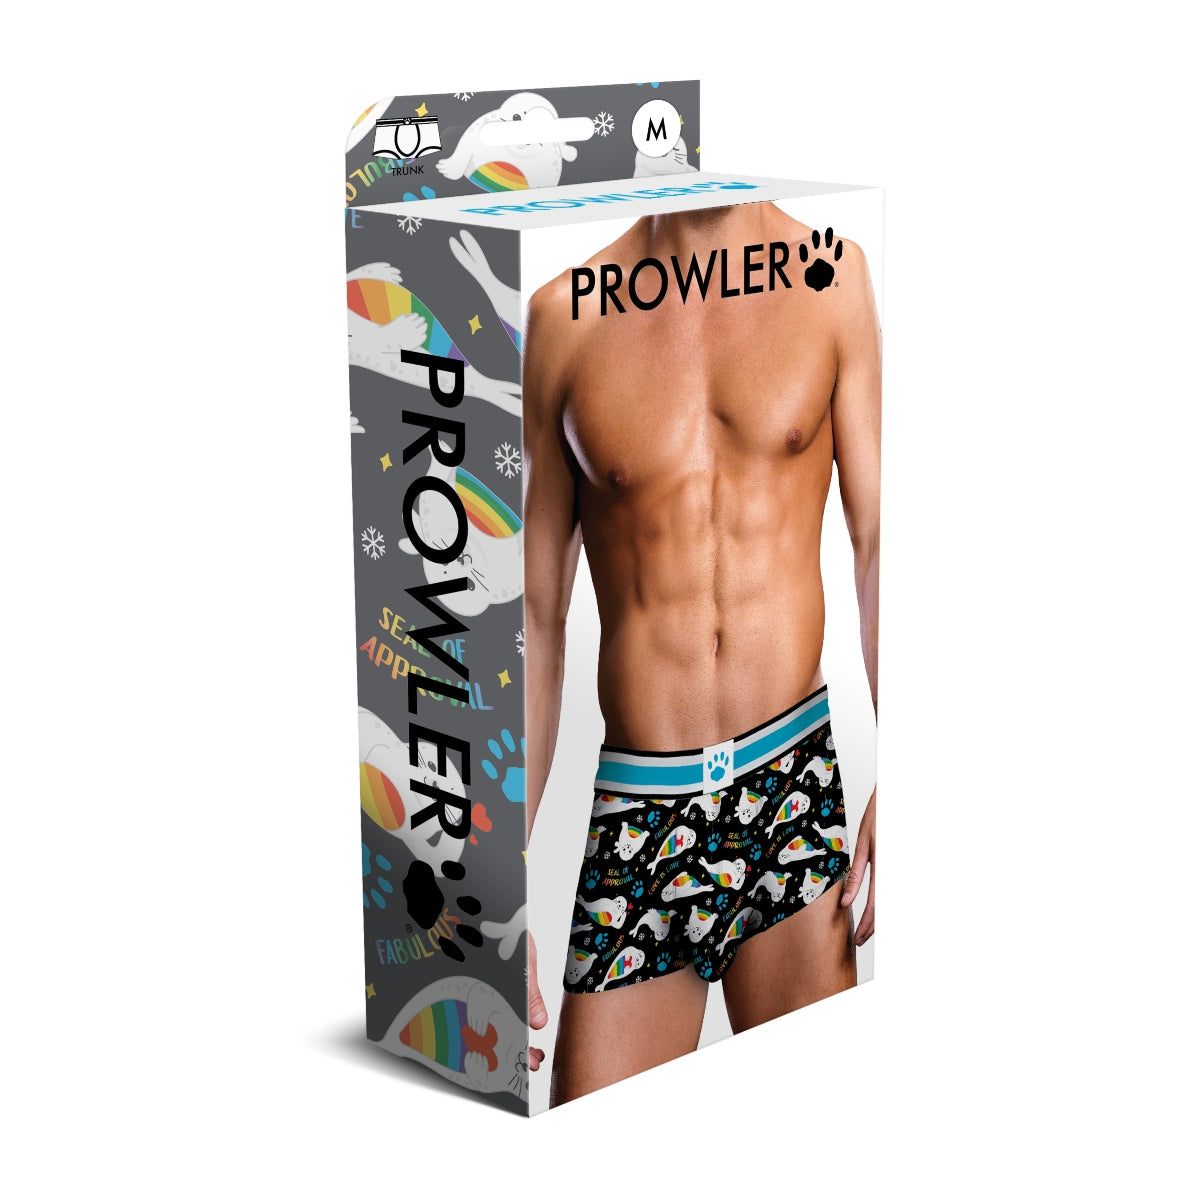 Prowler Seals Trunk (8205249446127)